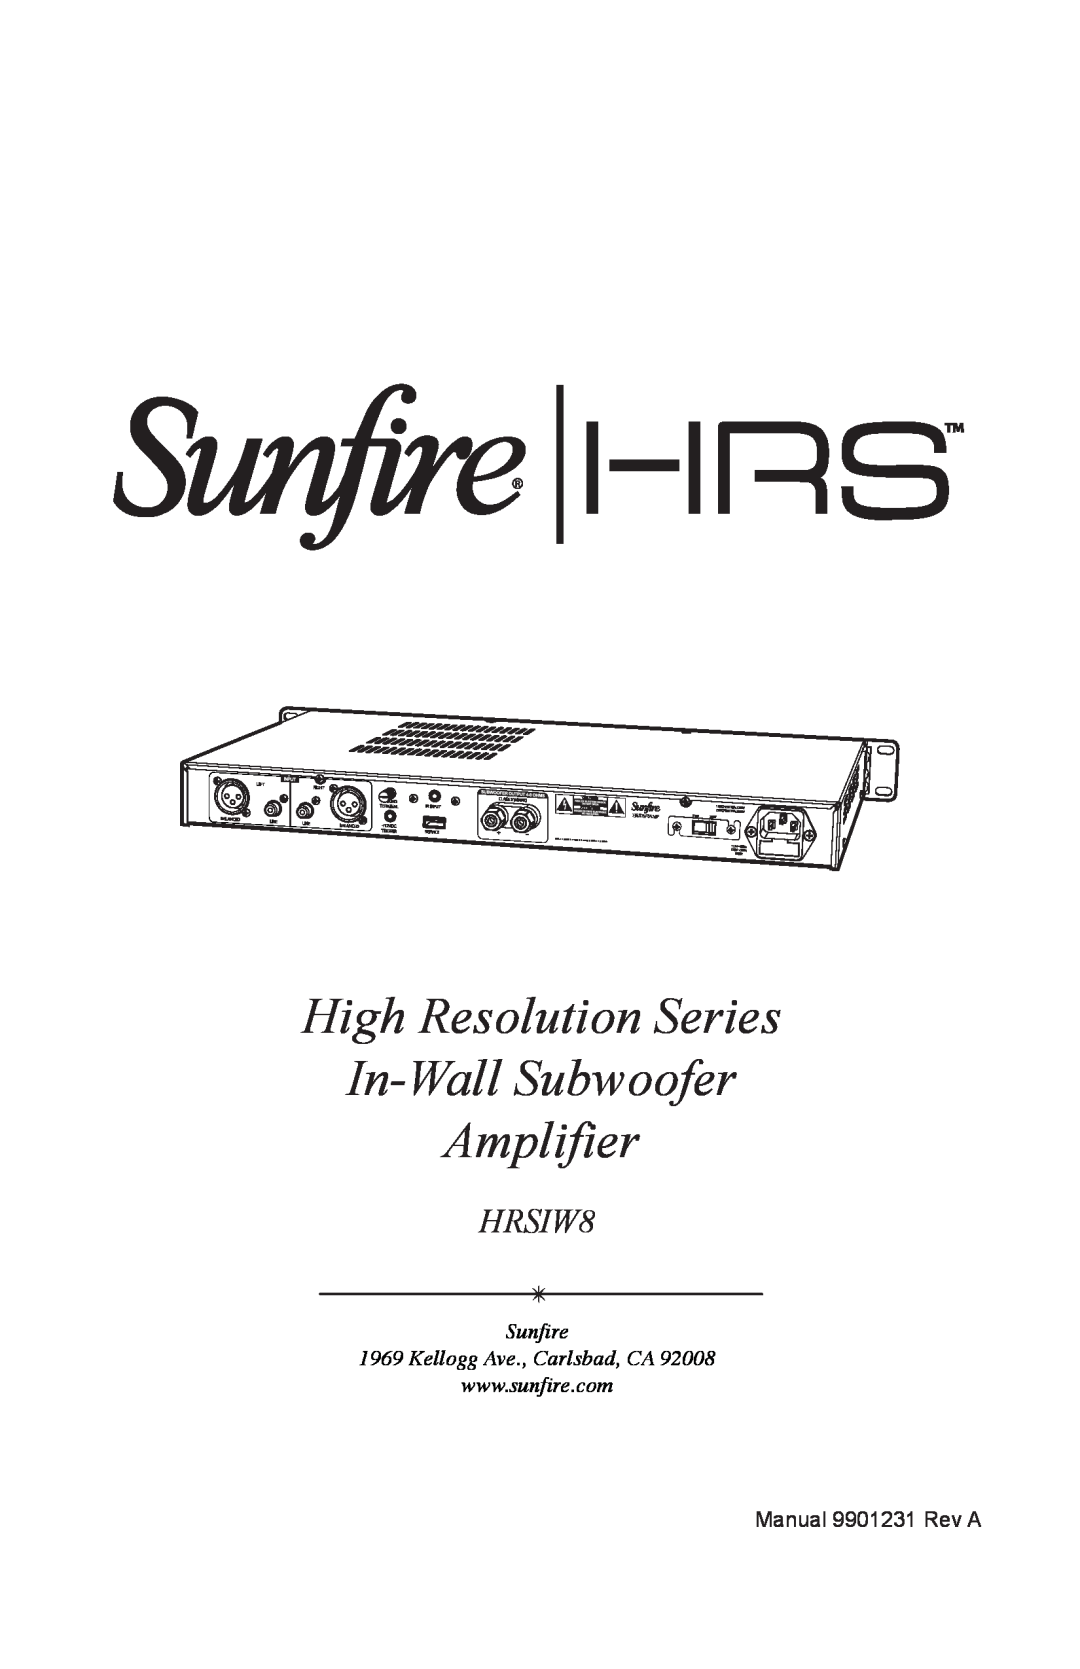 Sunfire HRSIW8 user manual High Resolution Series In-WallSubwoofer Amplifier, Sunfire 1969 Kellogg Ave., Carlsbad, CA 